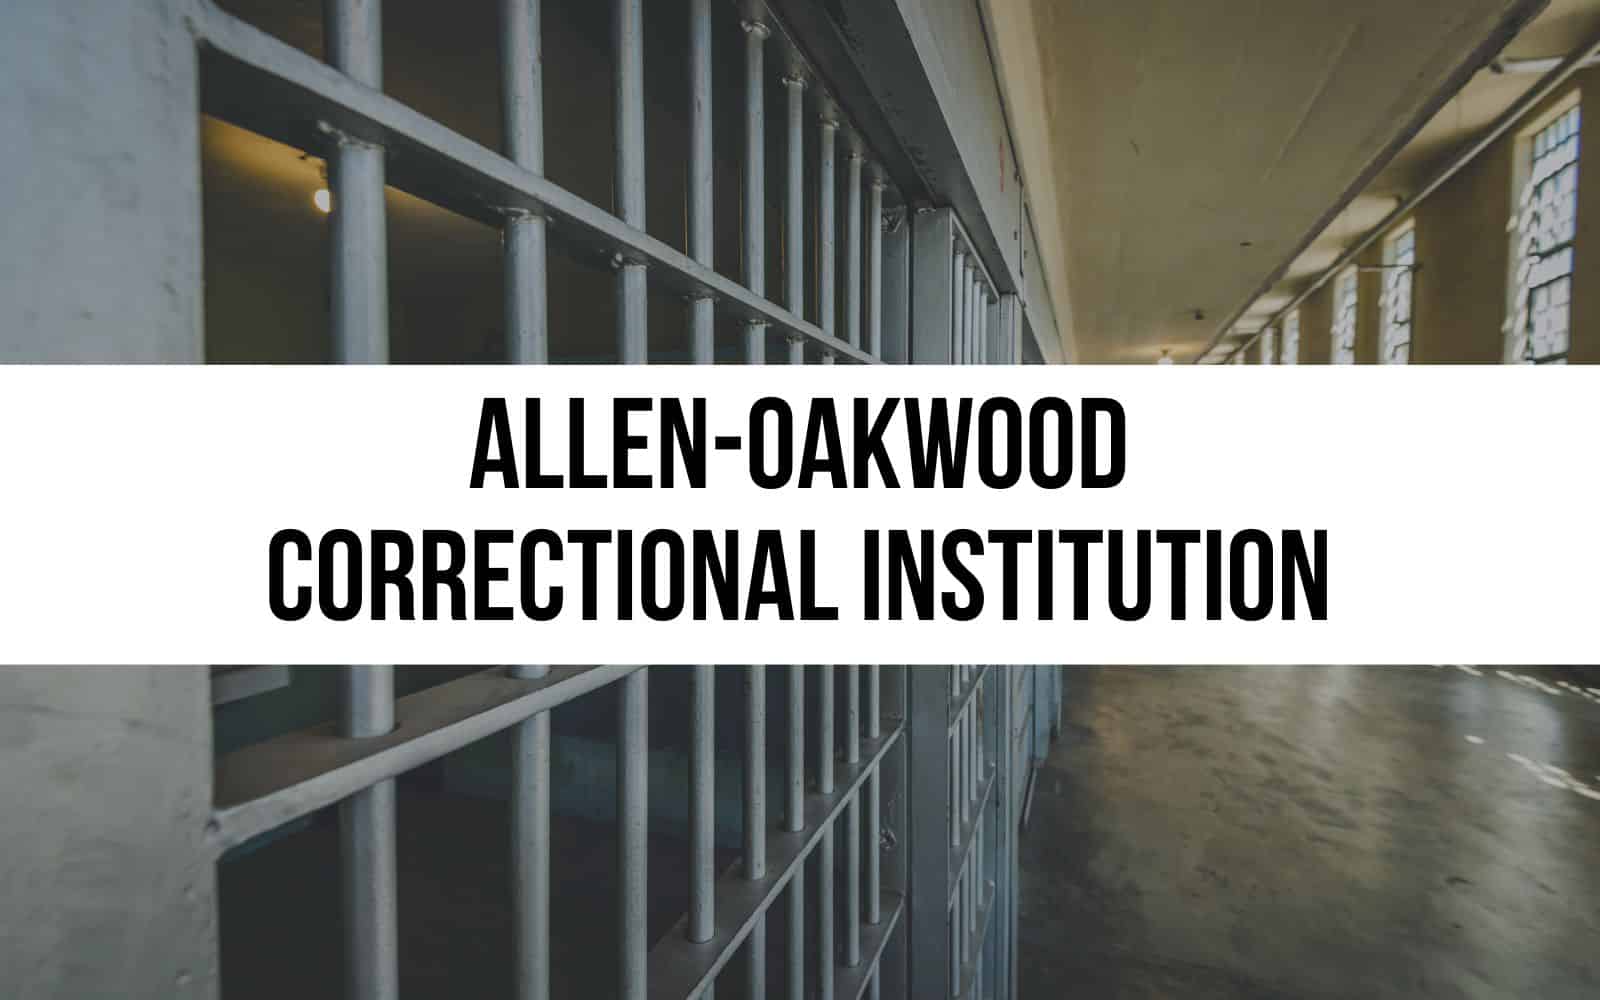 Allen-Oakwood Correctional Institution